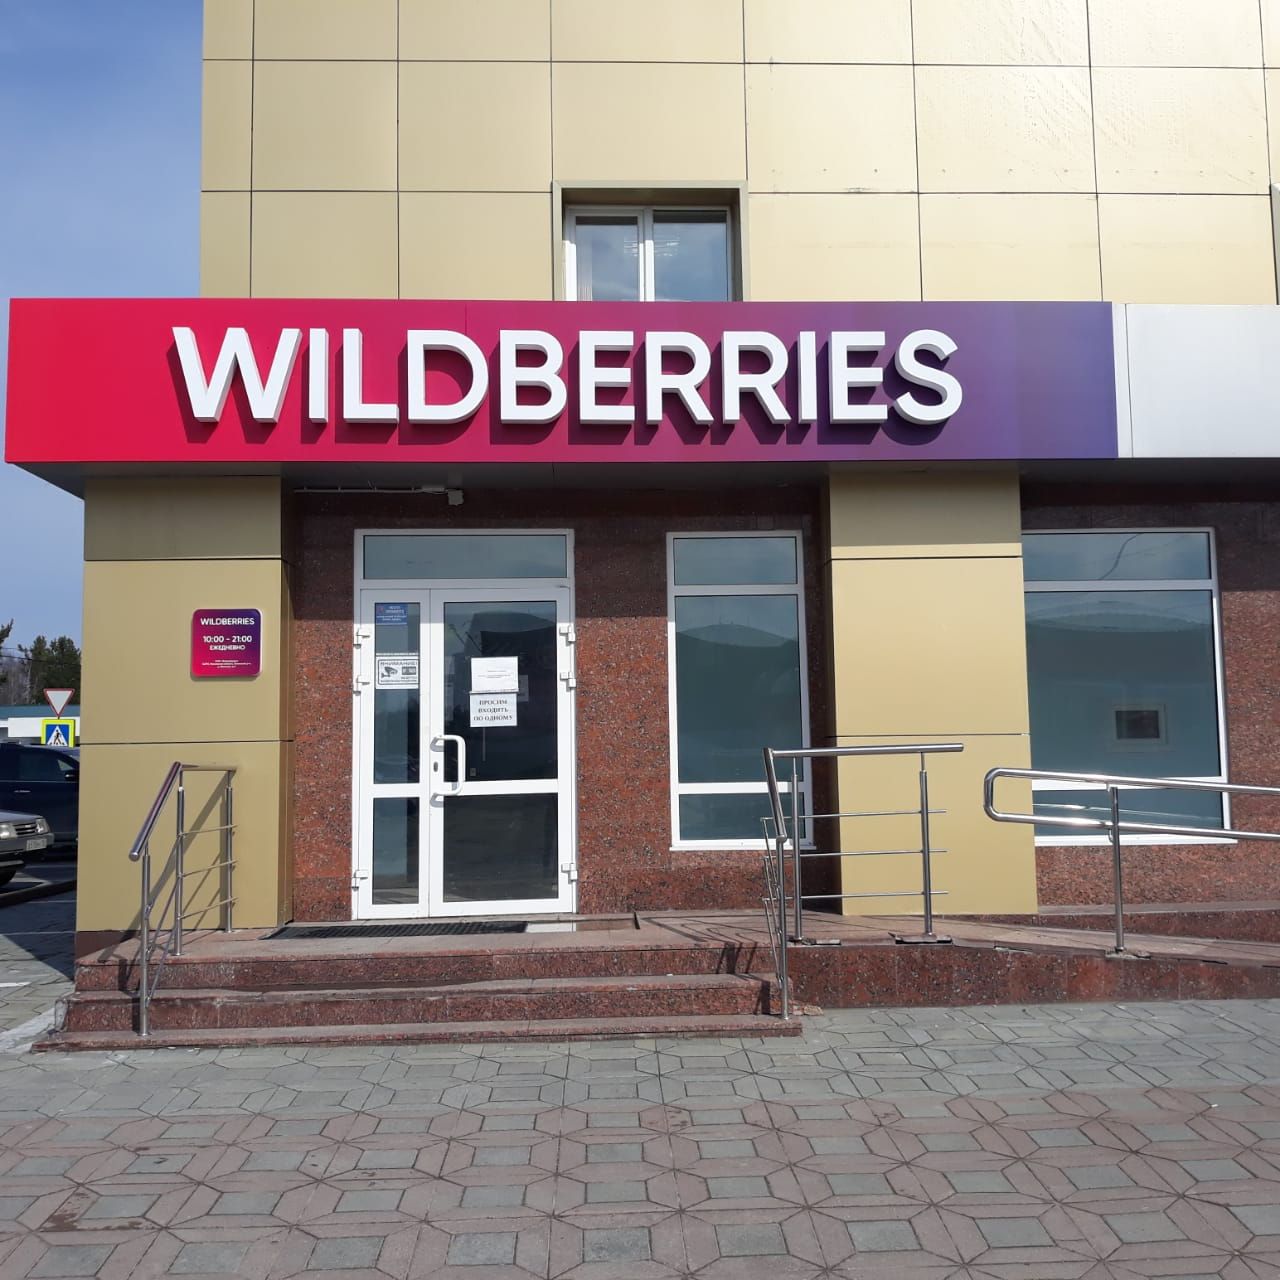 Https portal wildberries ru. Wildberries Company. Wildberries портал для сотрудников.